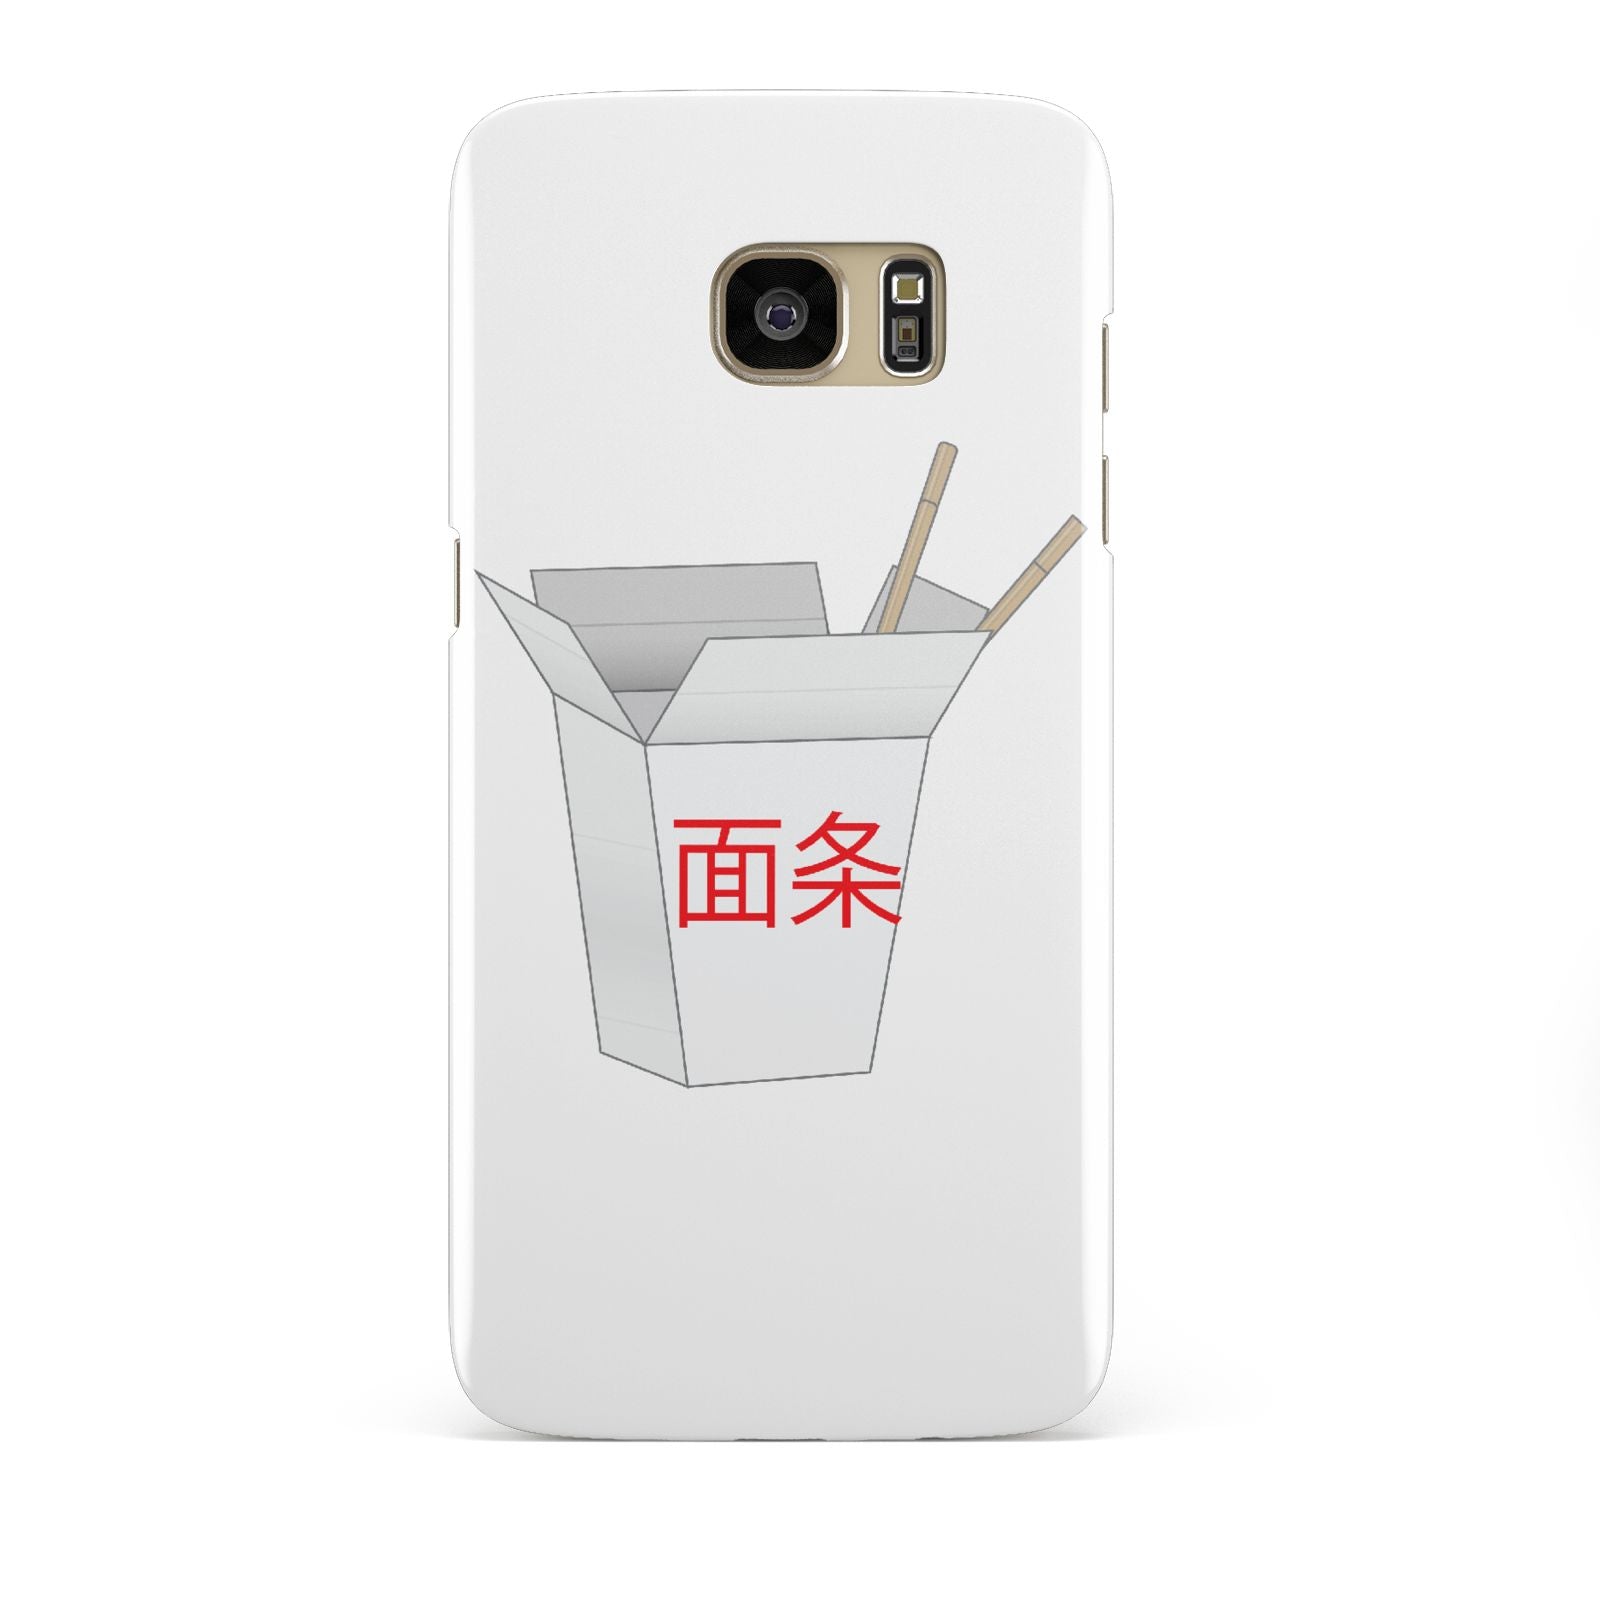 Chinese Takeaway Box Samsung Galaxy S7 Edge Case